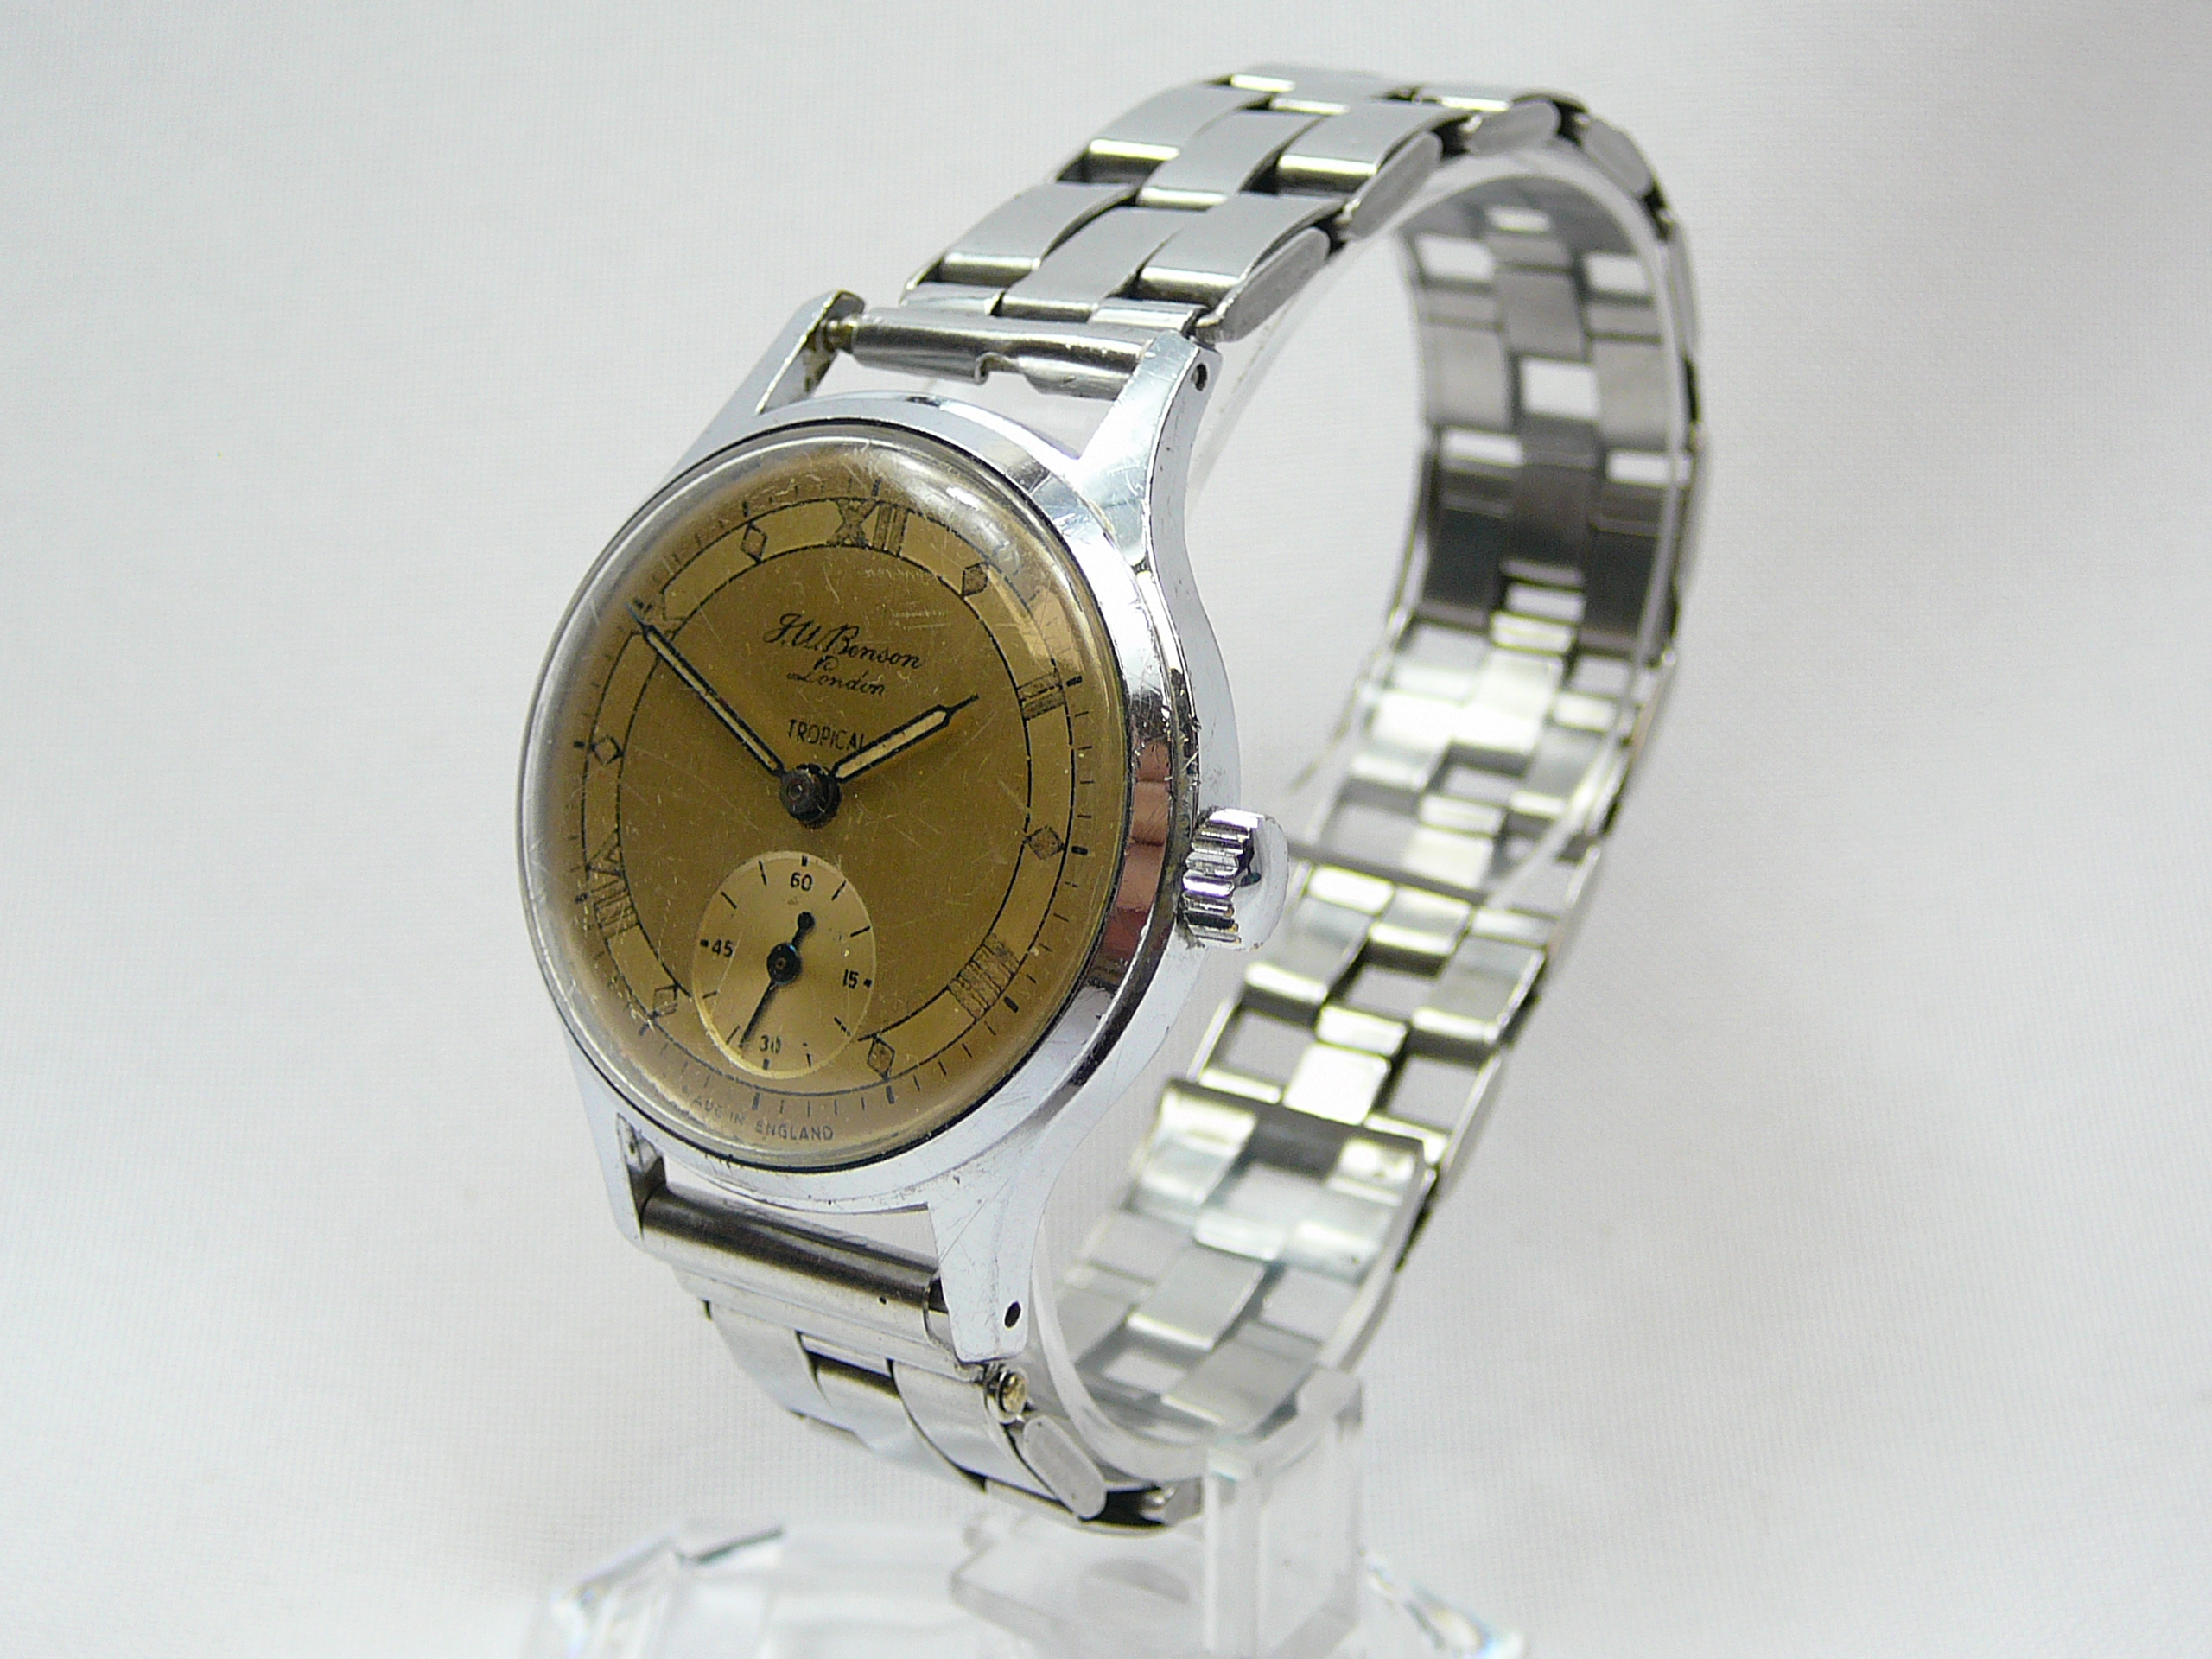 Gents vintage JW Benson wristwatch - Image 3 of 3